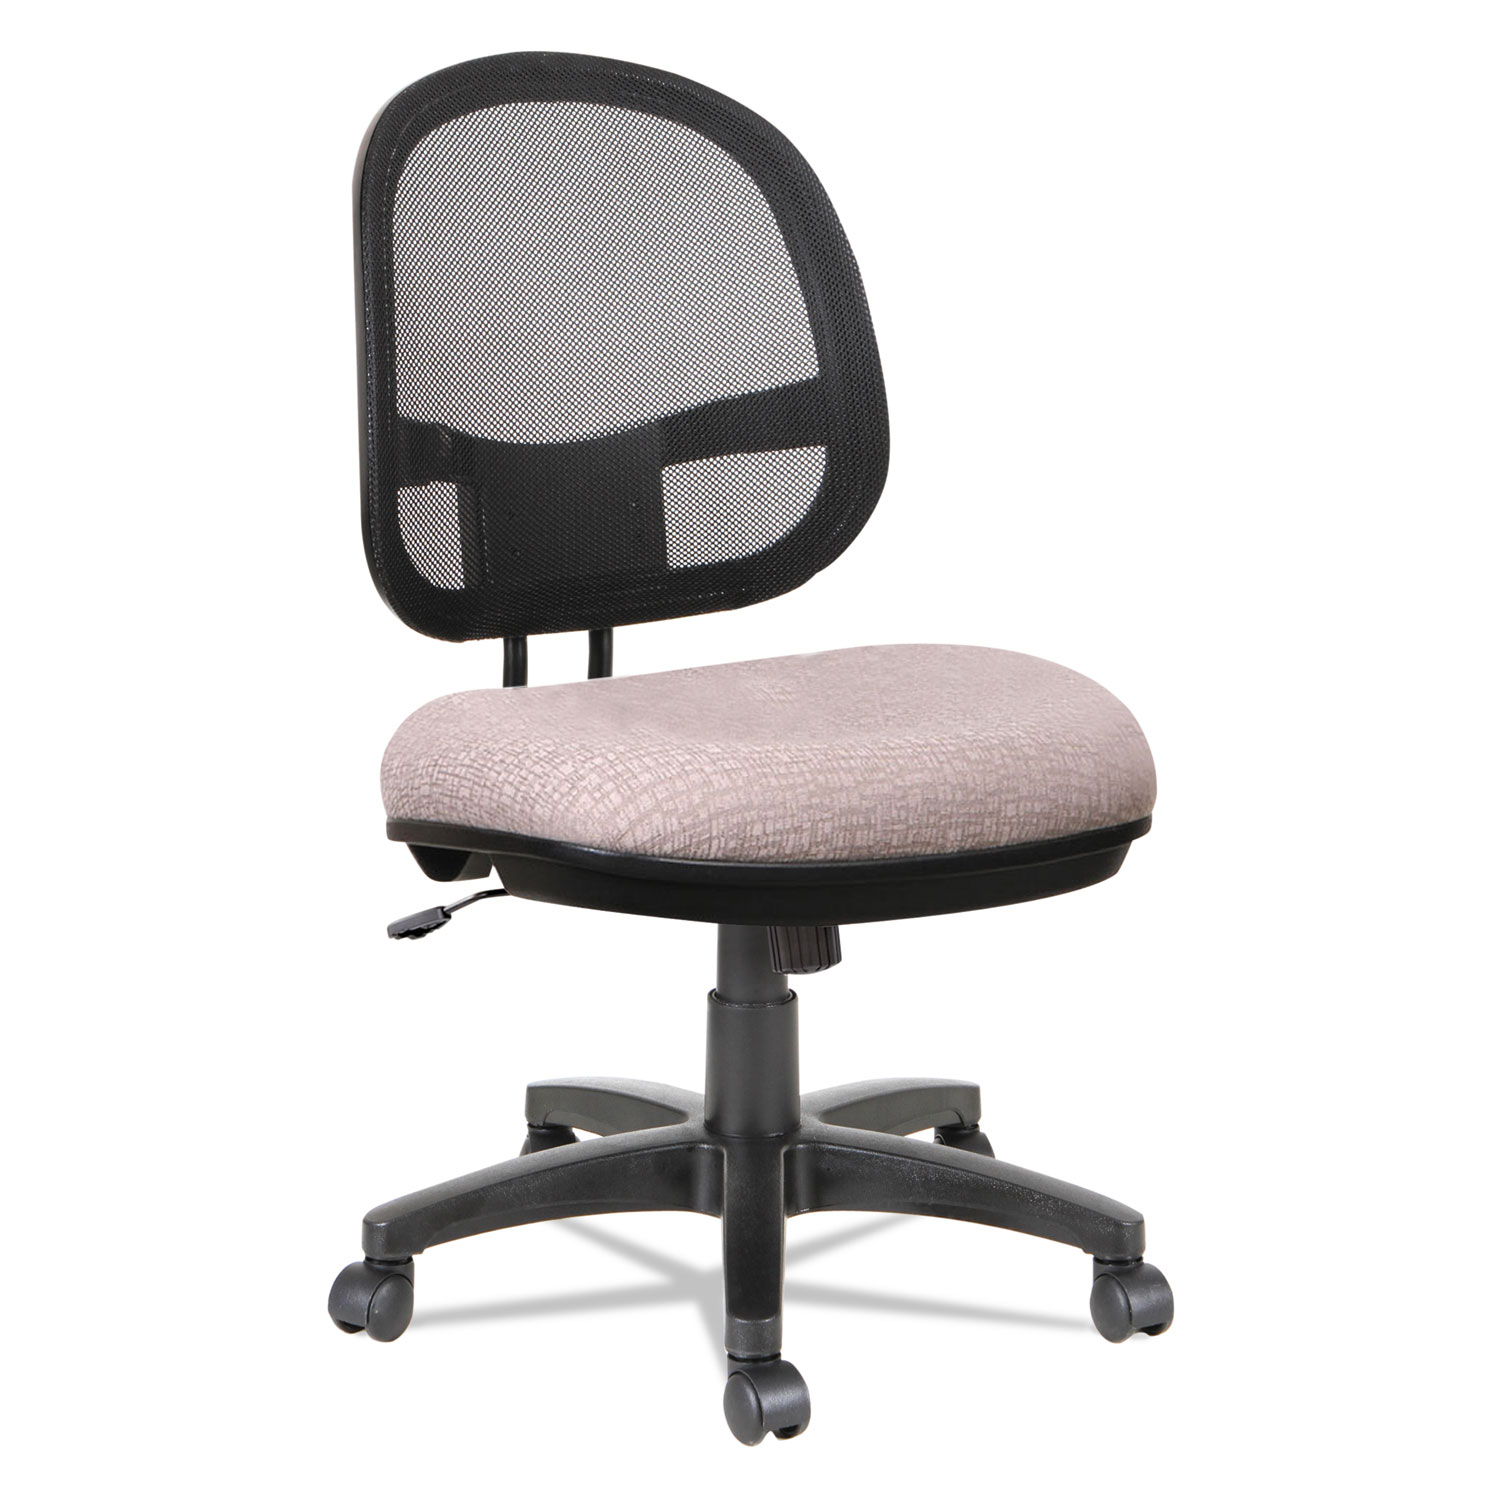  Alera ALEIN4854 Alera Interval Series Swivel/Tilt Mesh Chair, Supports up to 275 lbs., Sandstone Tan Seat/Sandstone Tan Back, Black Base (ALEIN4854) 